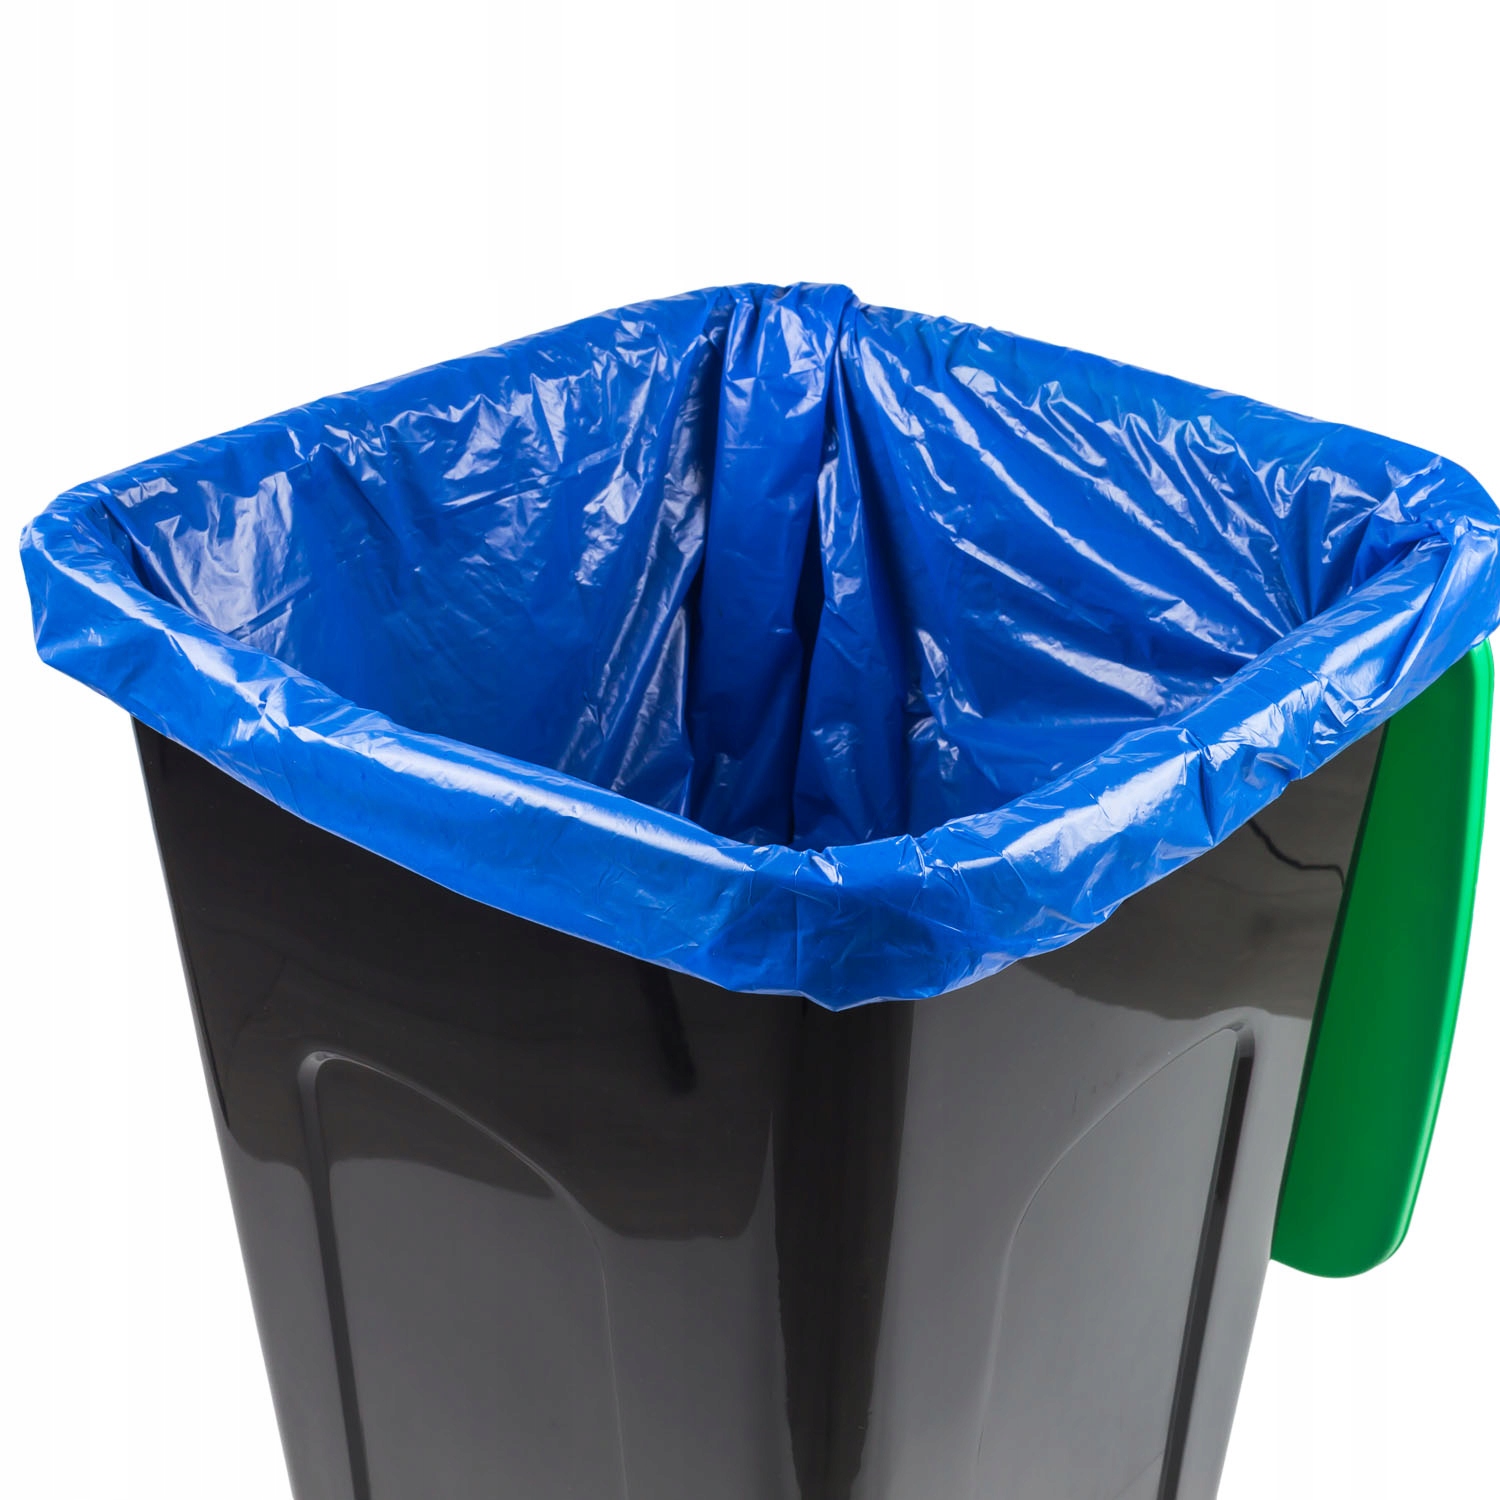 Корзины сегрегация зеленый желтый синий коричневый Kind trash bins